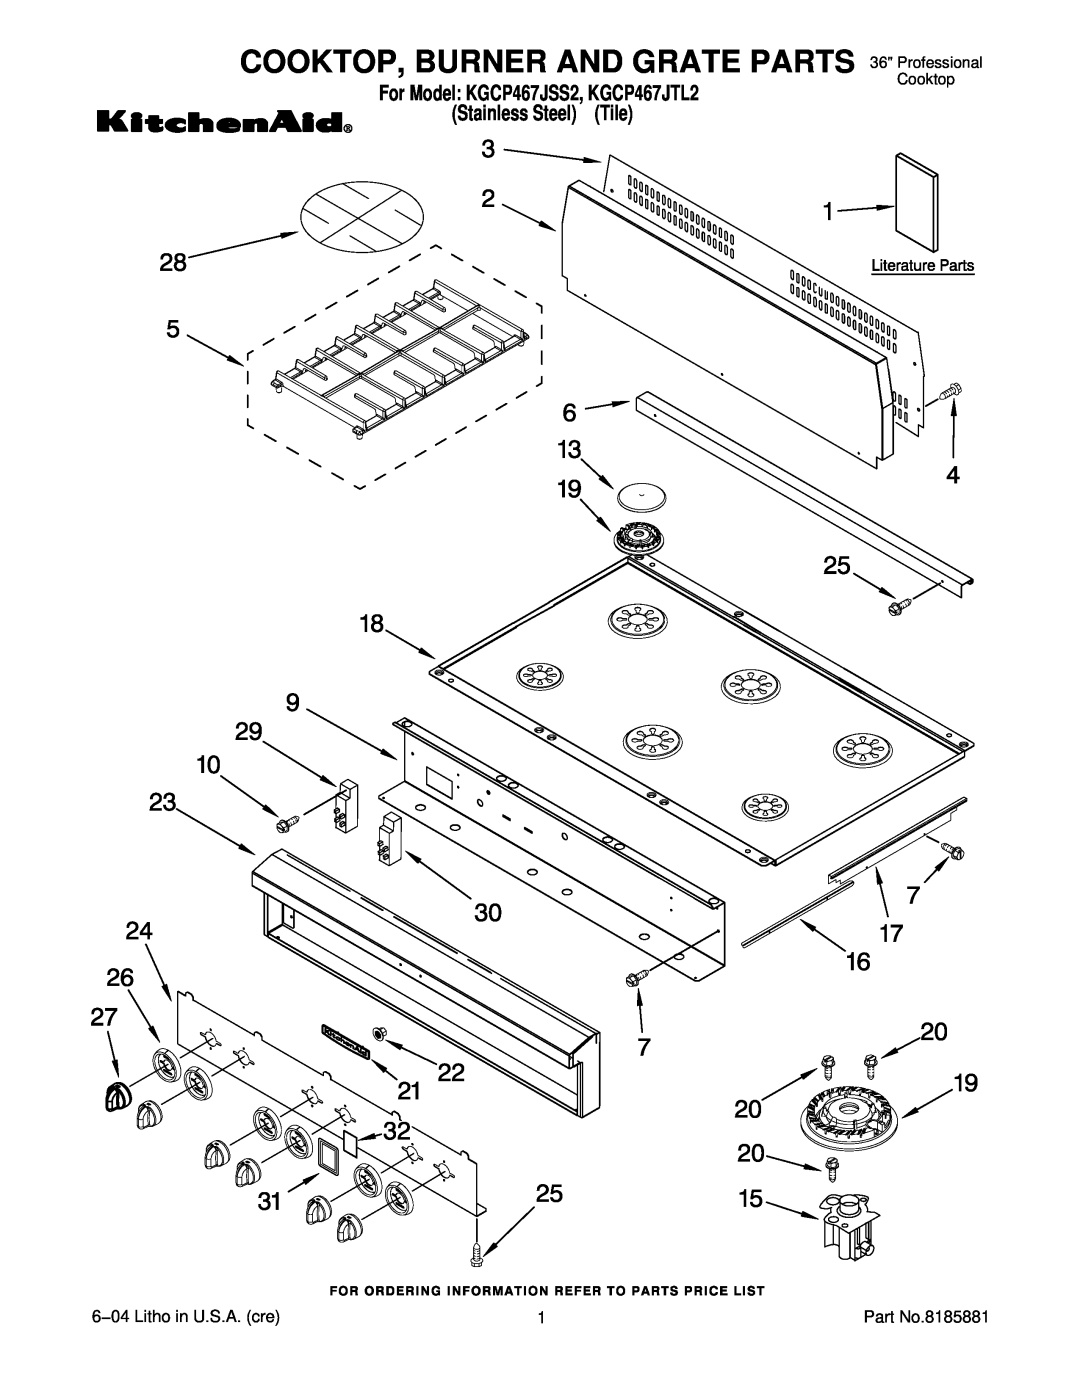 KitchenAid manual Cooktop, Burner And Grate Parts, For Model KGCP467JSS2, KGCP467JTL2 Stainless Steel Tile 